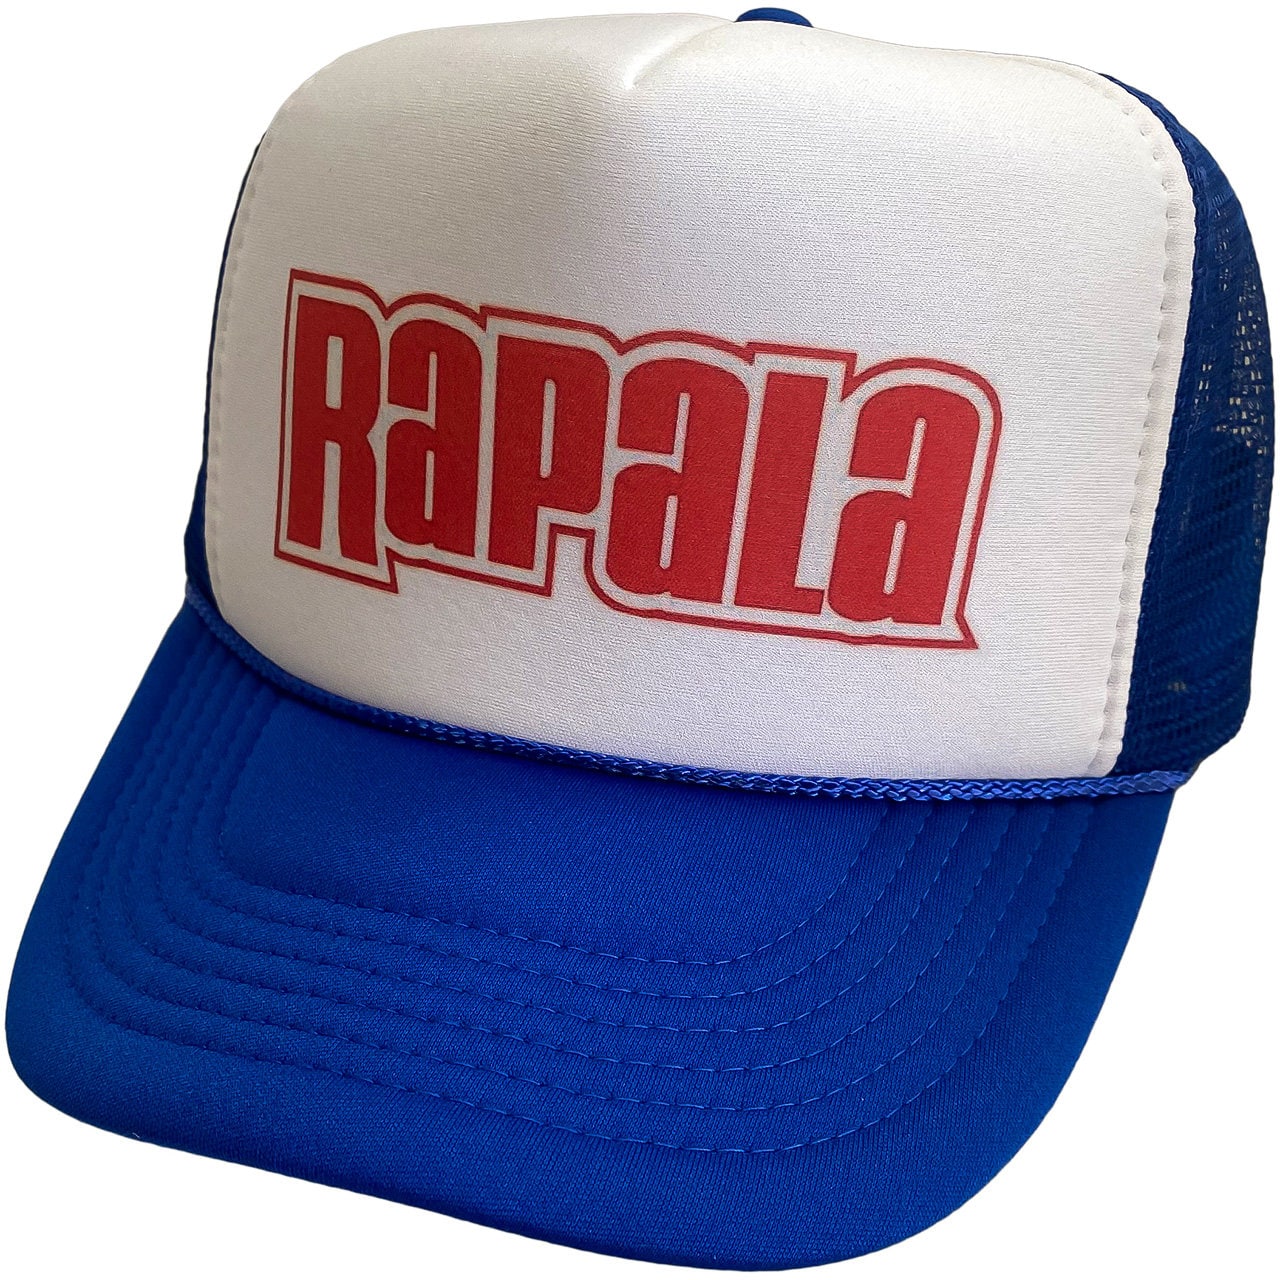 Vintage Rapala Trucker Hat Gift Idea for Men and Women Adjustable Snap Back Cap Blue